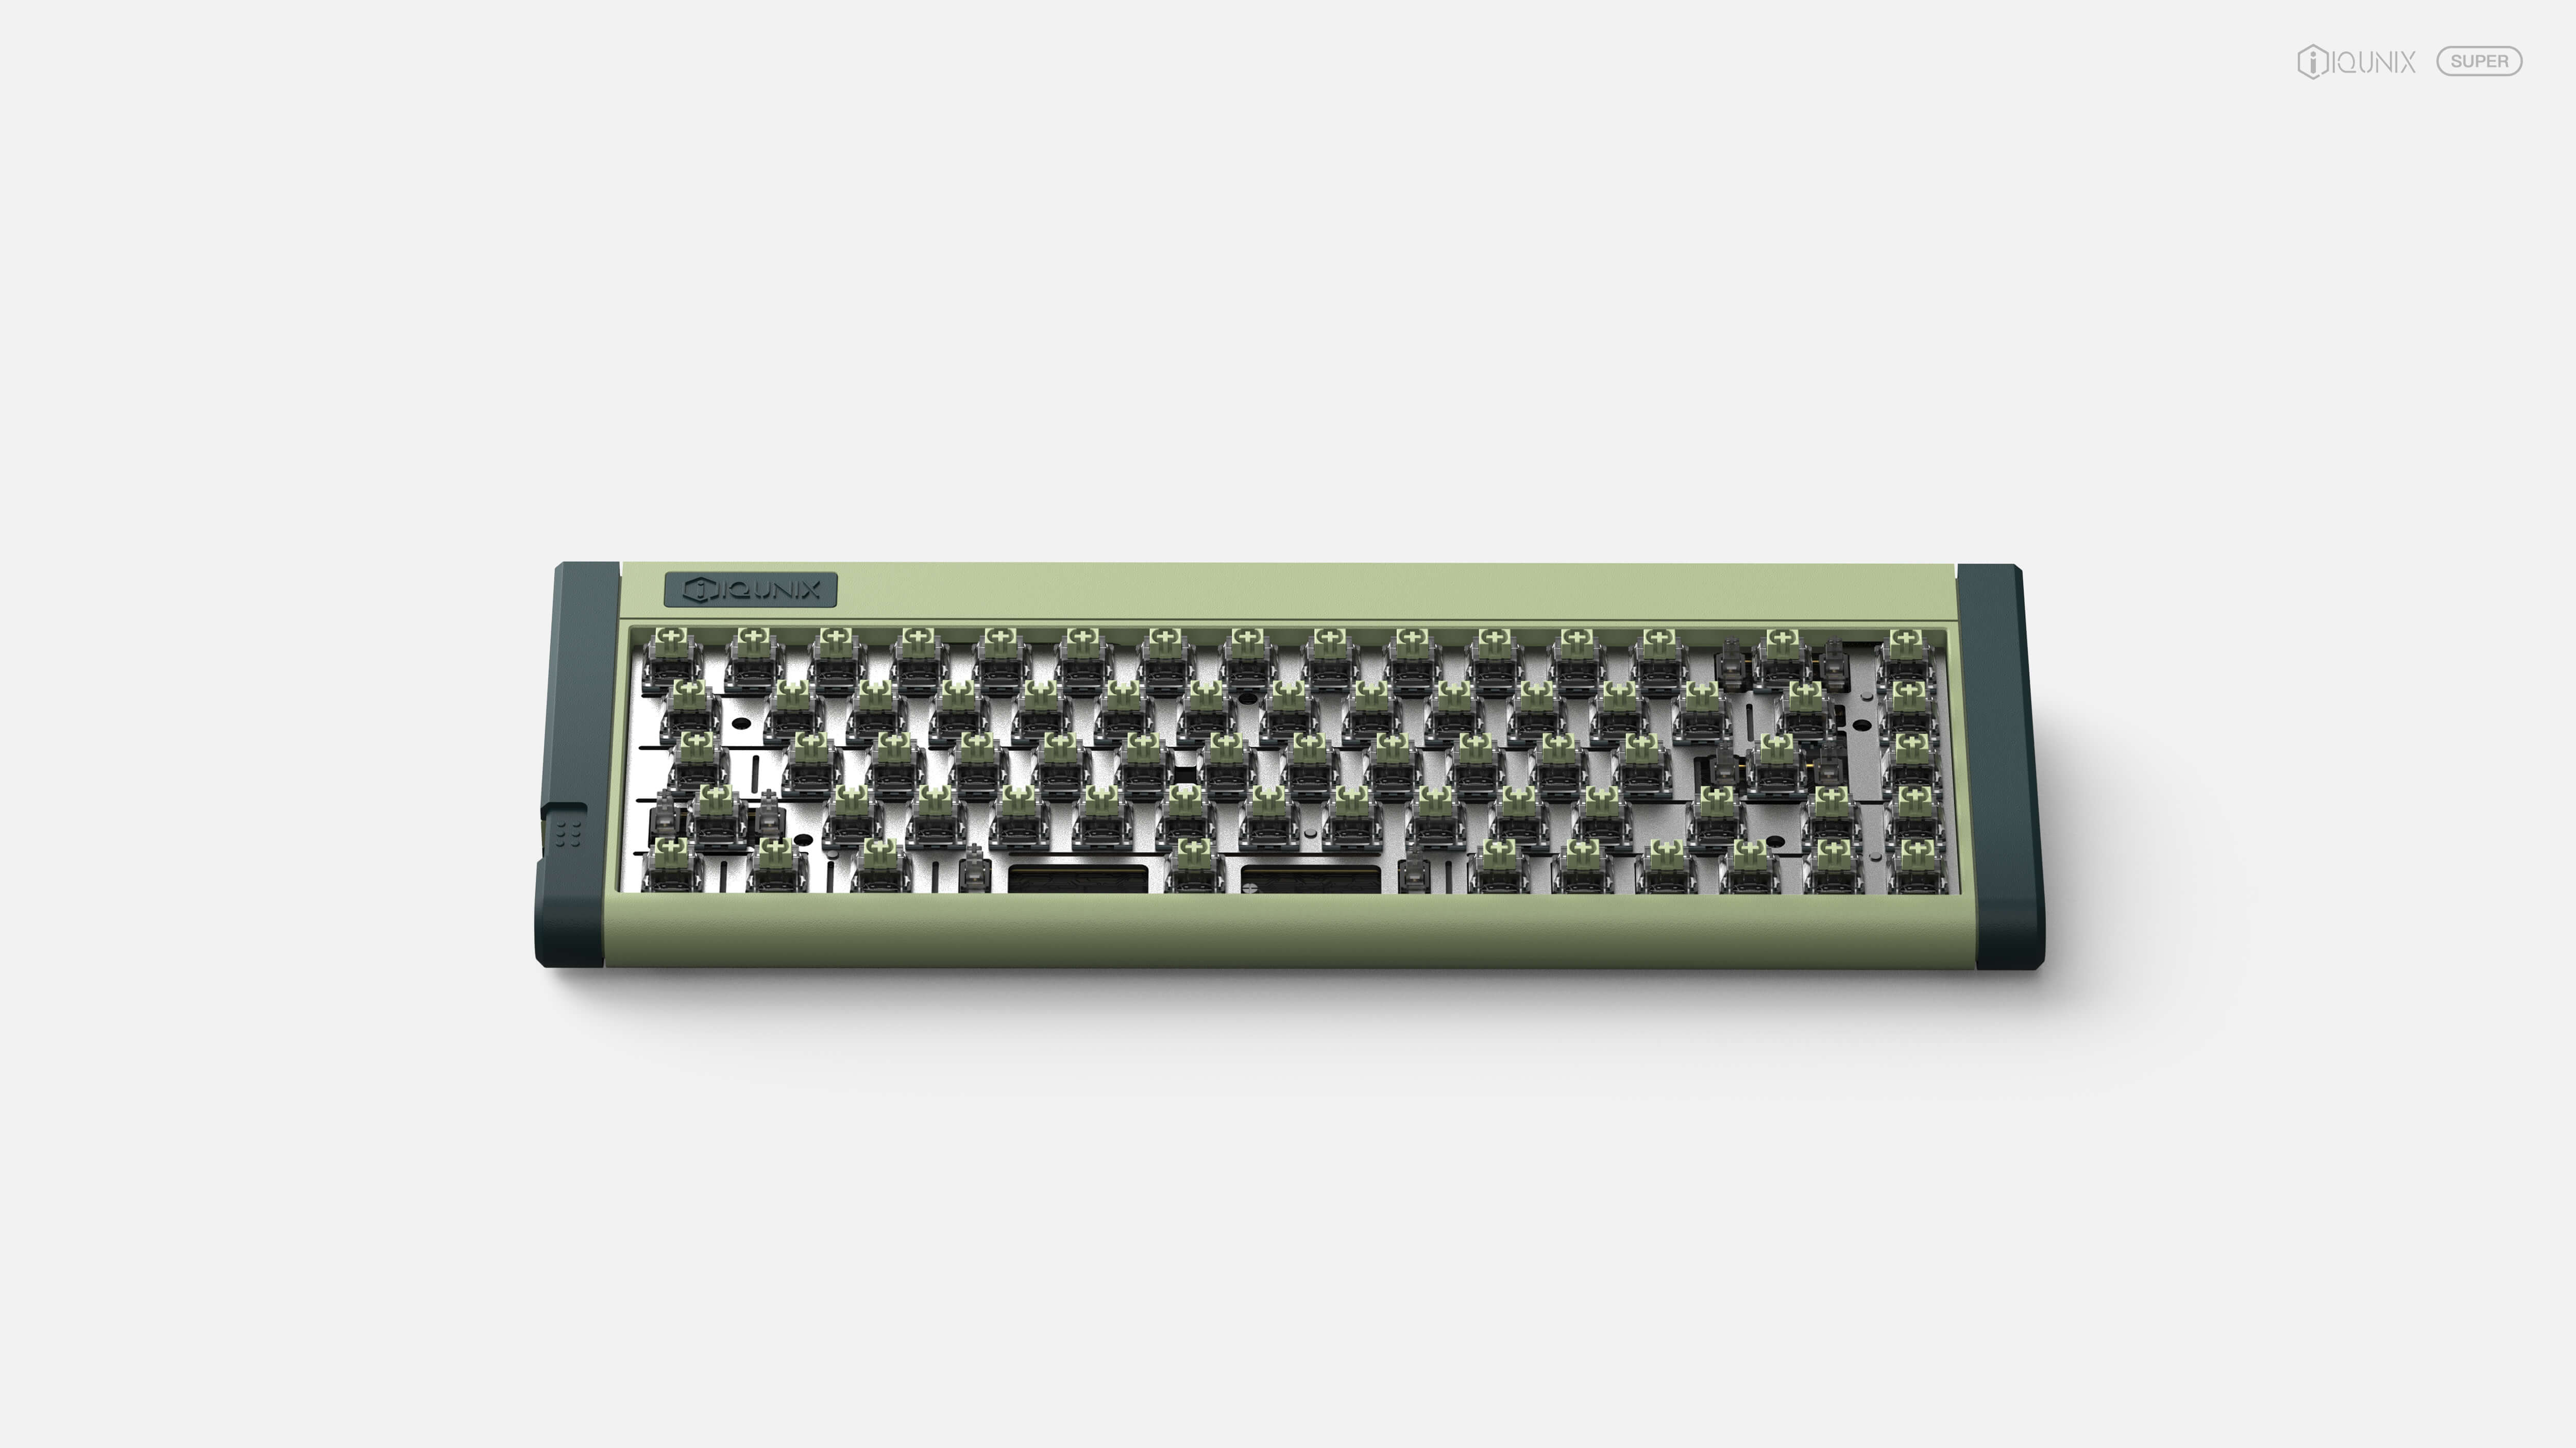 IQUNIX SUPER Ardbeg 65 Custom keyboard